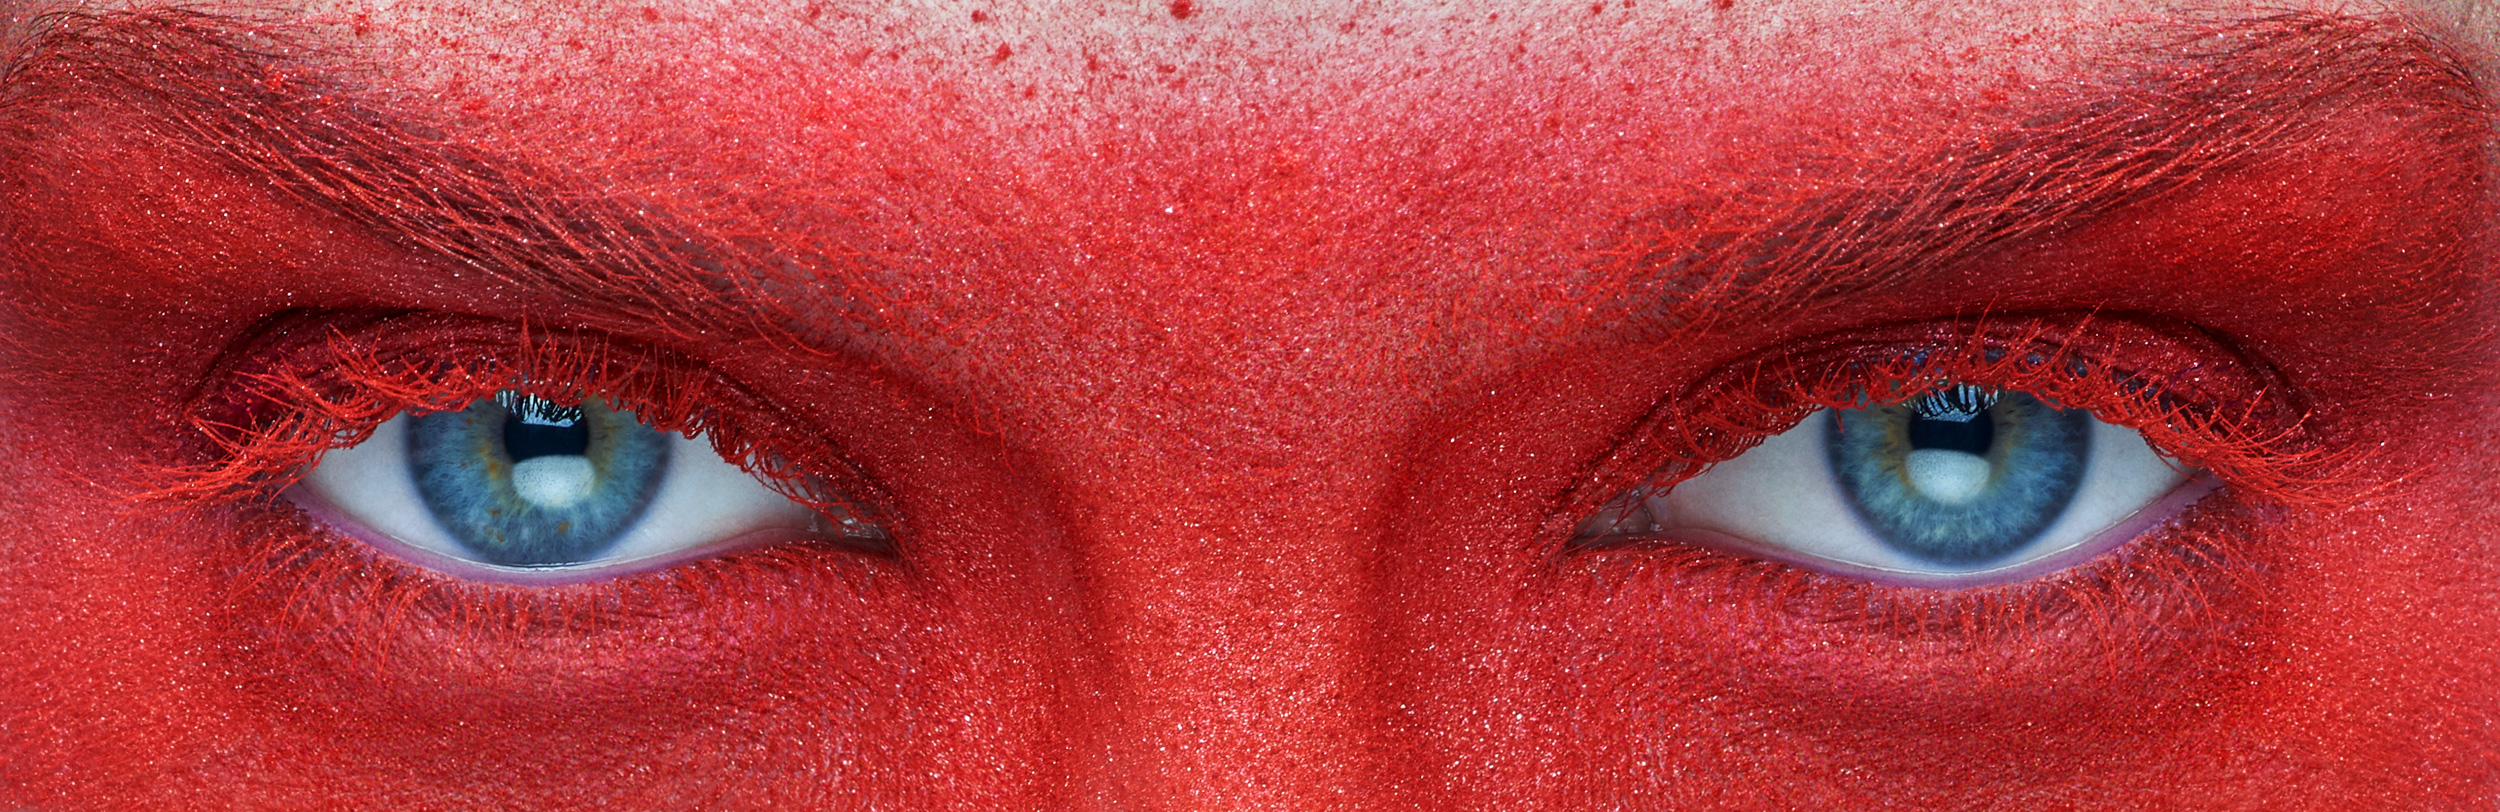 Musilek-Stan-Red-Eyes-Makeup